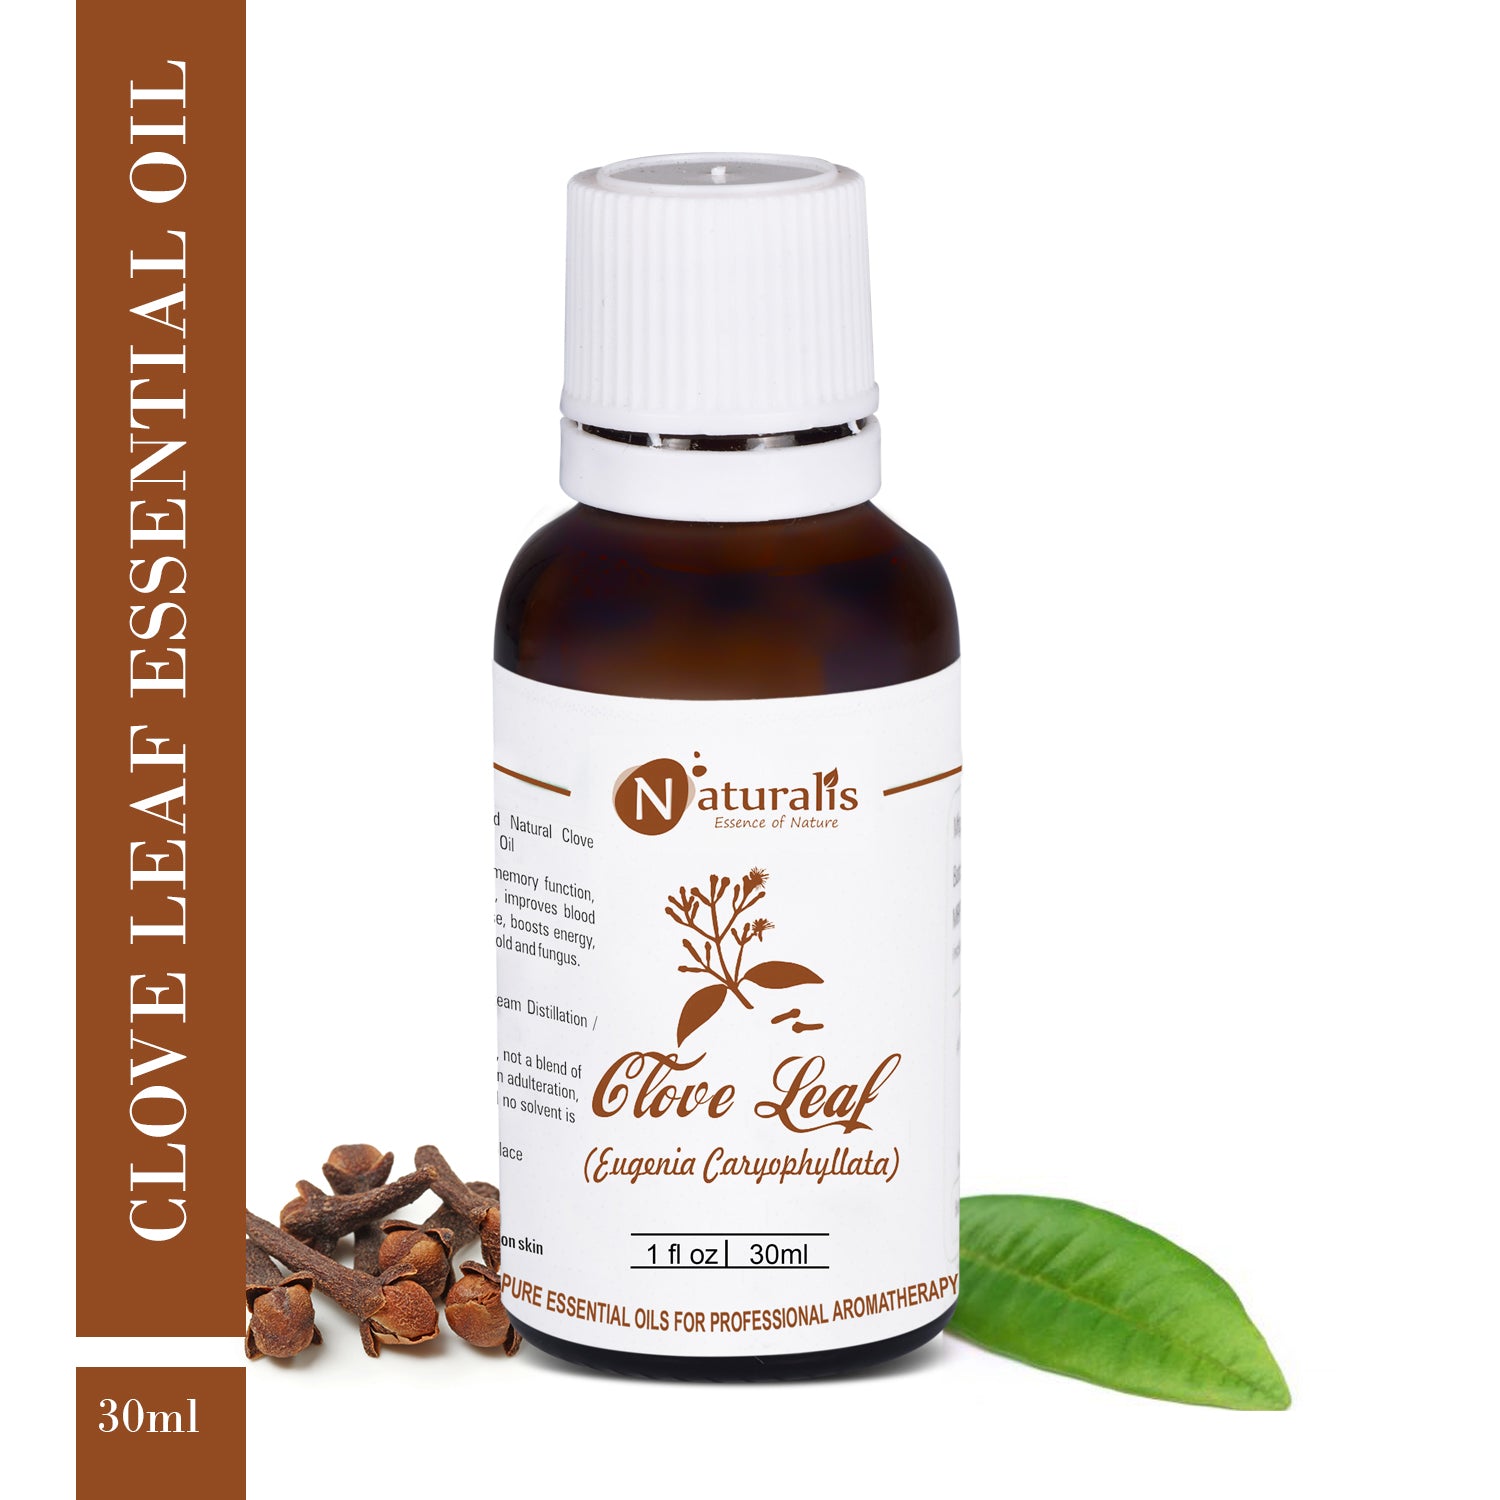 Clove Leaf Essential Oil by Naturalis - Pure & Natural - Naturalis